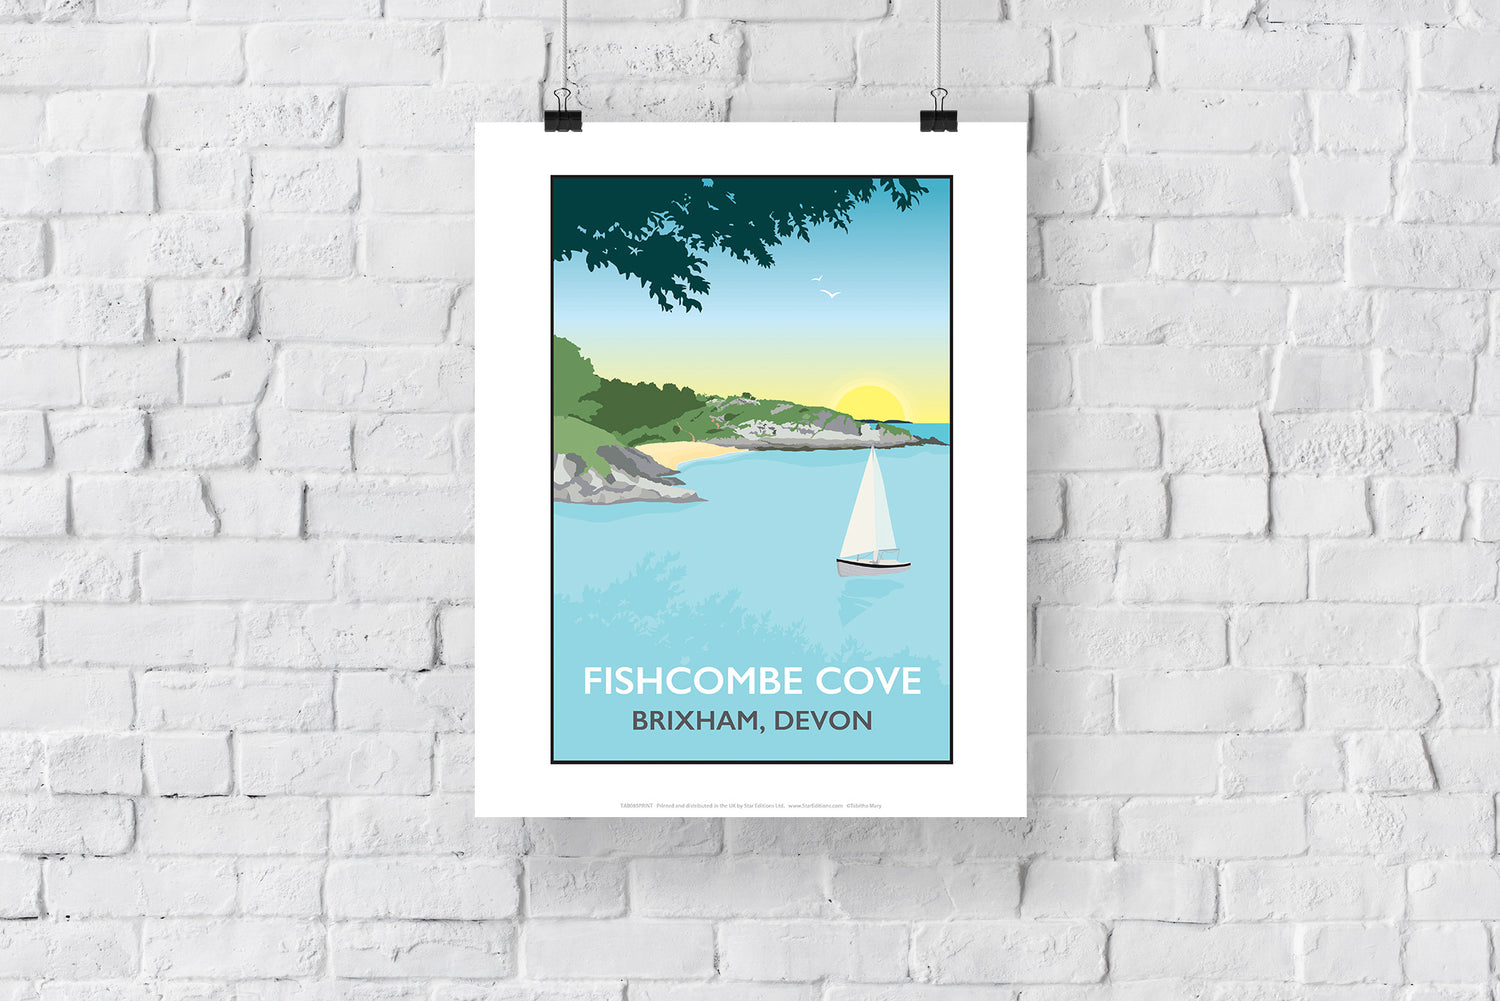 Fishcombe Cove, Brixham - Art Print